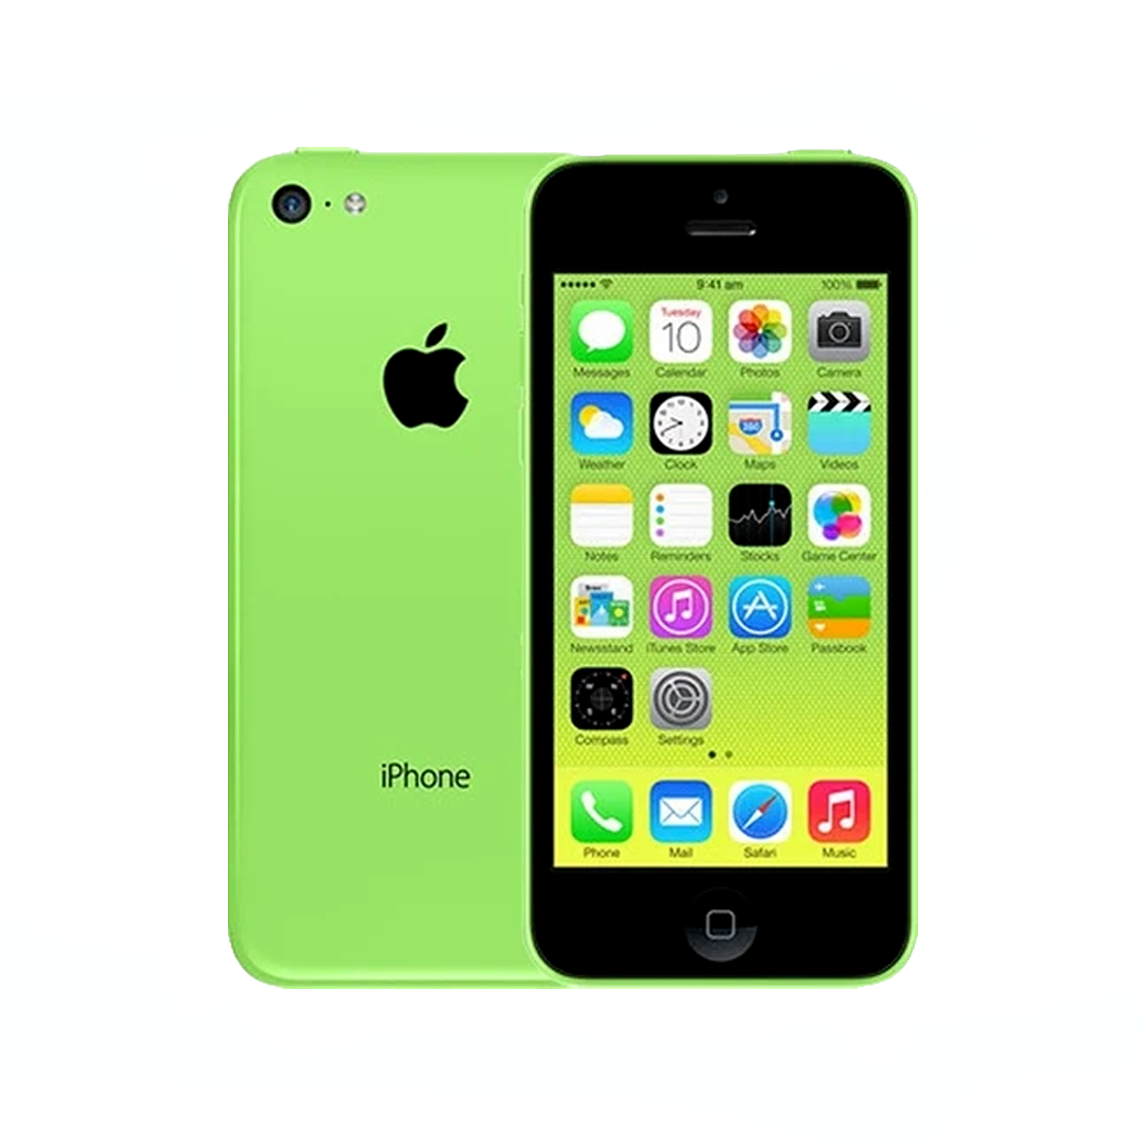 Refurbished Apple iPhone 5C Unlocked Mobile Phone in Green Black Colour